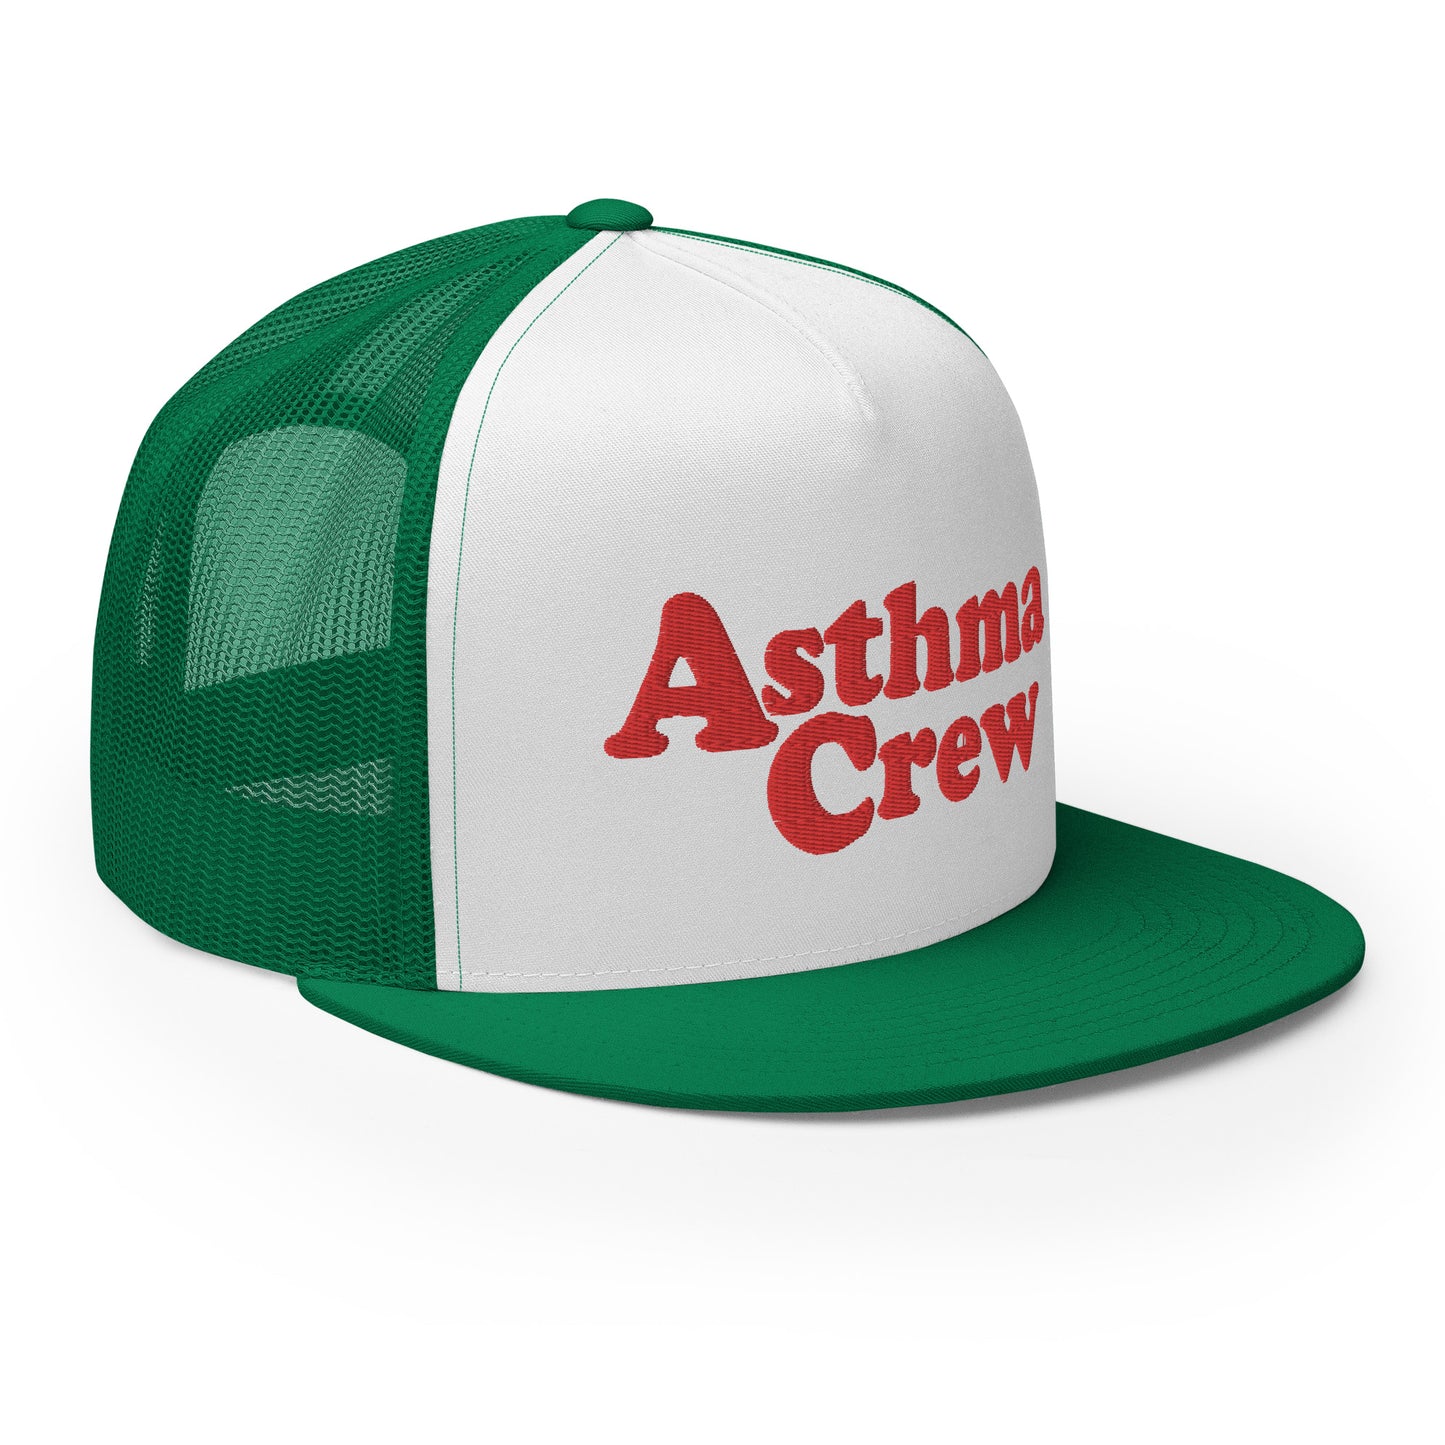 Asthma Crew - Trucker Cap